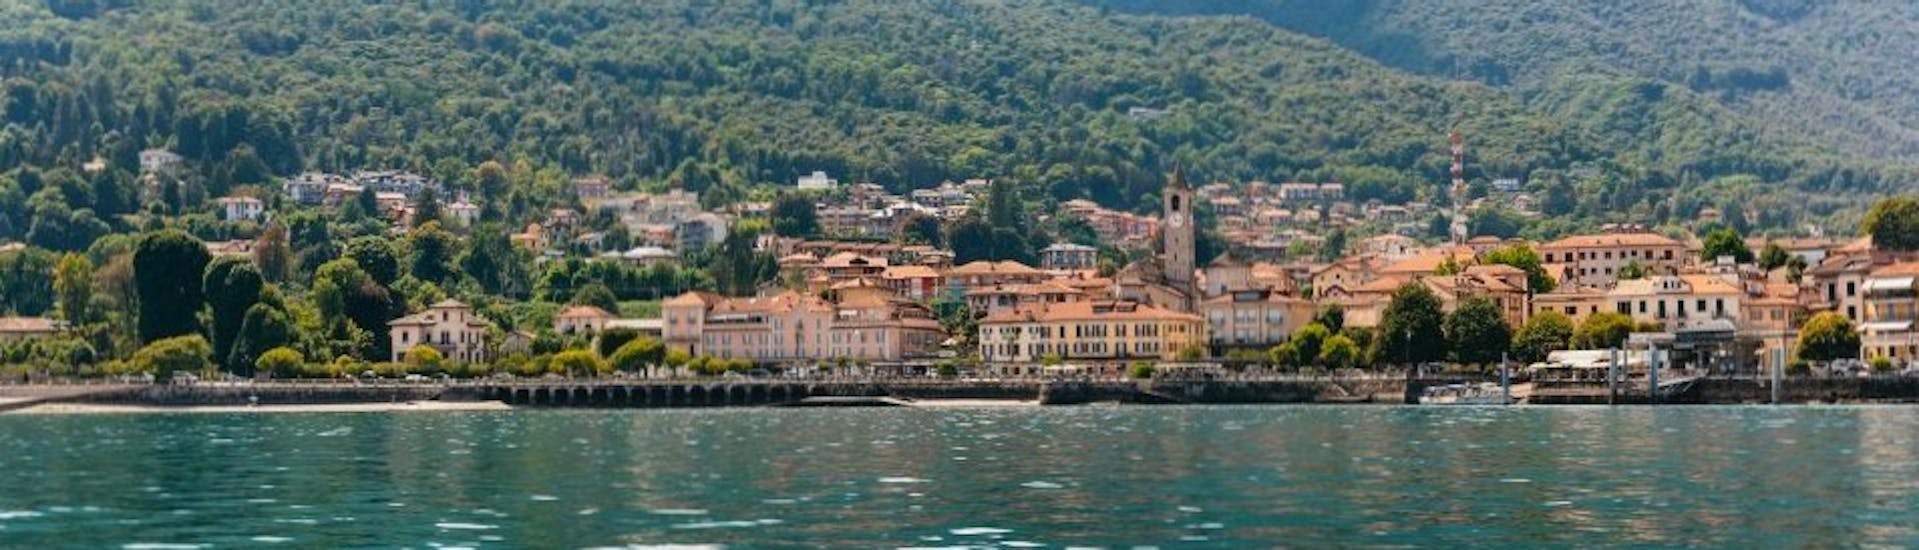 Balade en bateau Stresa - Isola Bella (Lake Maggiore) avec Visites touristiques.